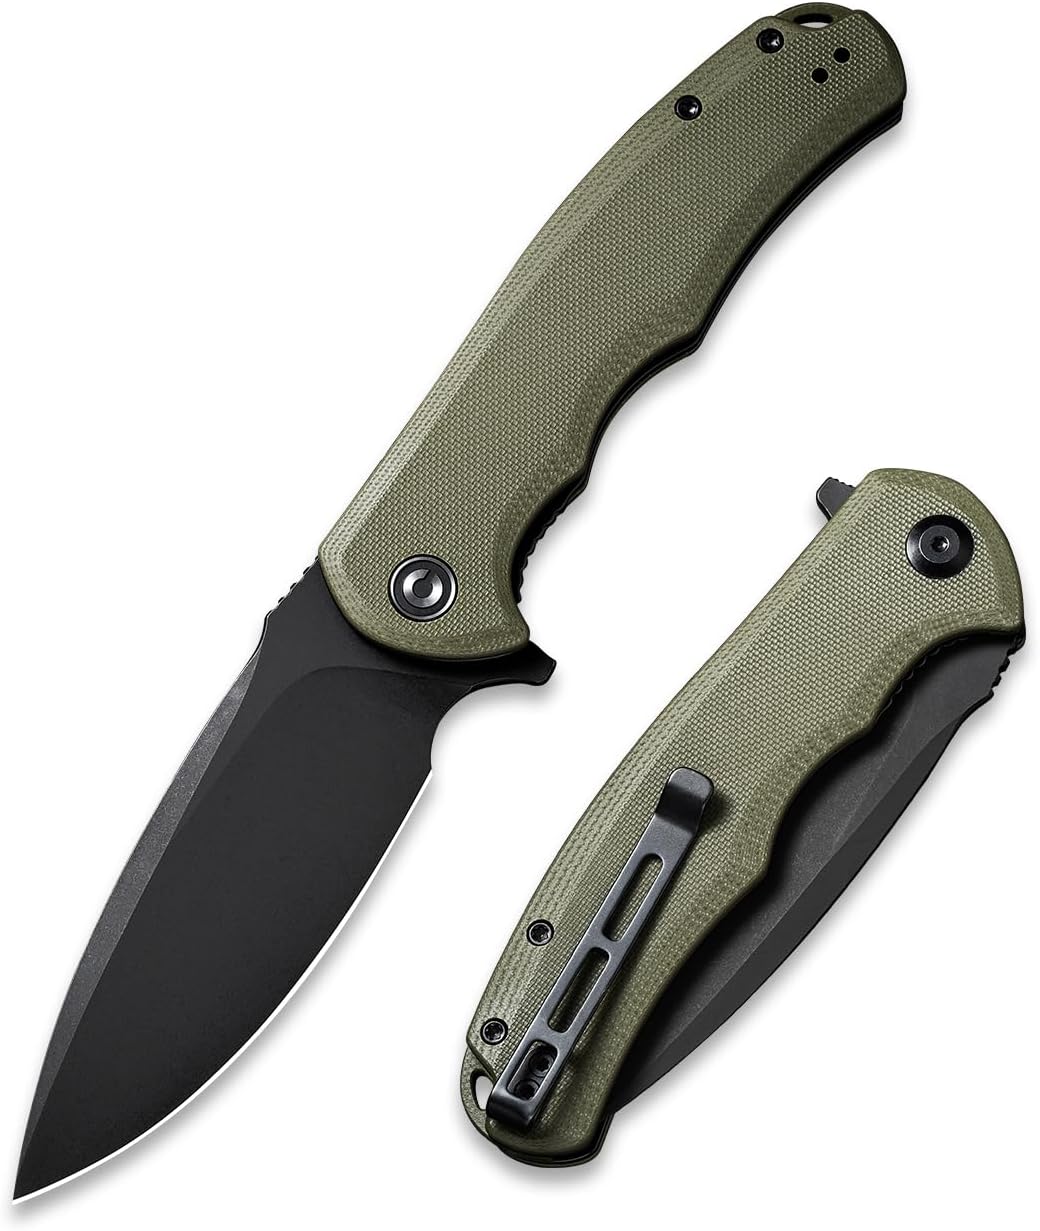 Civivi Praxis Folding Knife - Amazon Lightning Deal $34